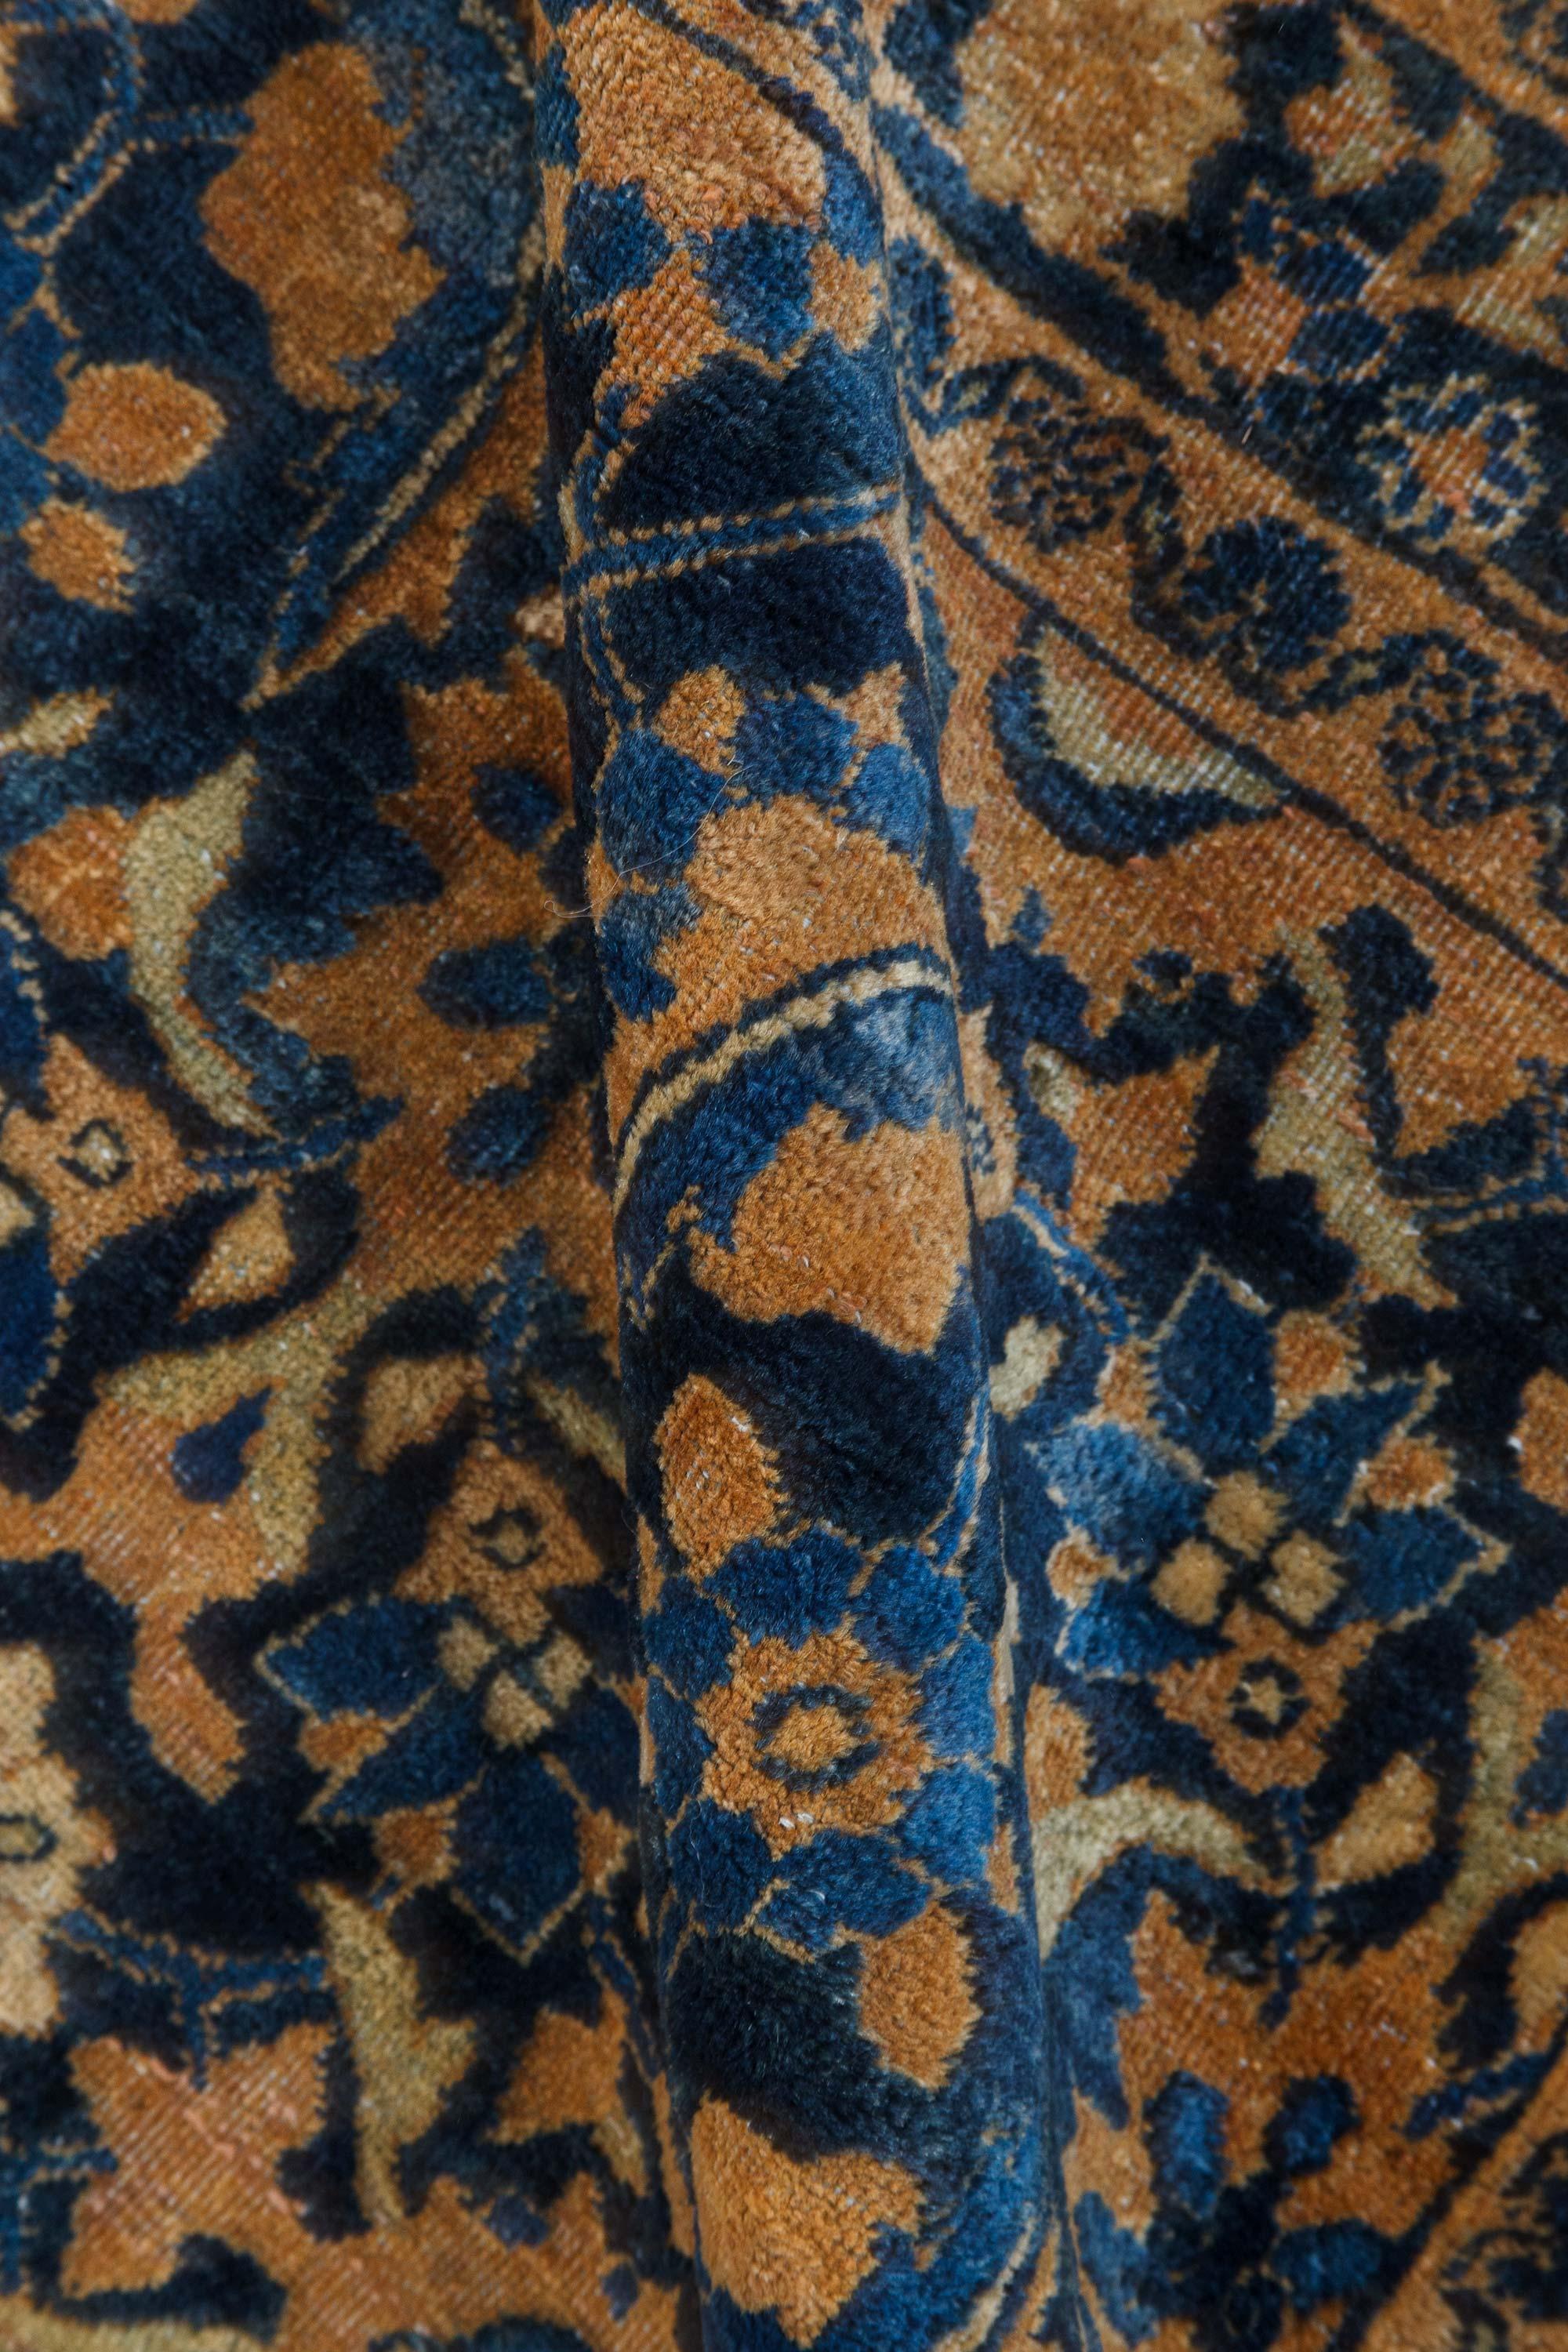 Authentic Persian Tabriz Botanic Blue Handmade Wool Rug
Size: 10'5